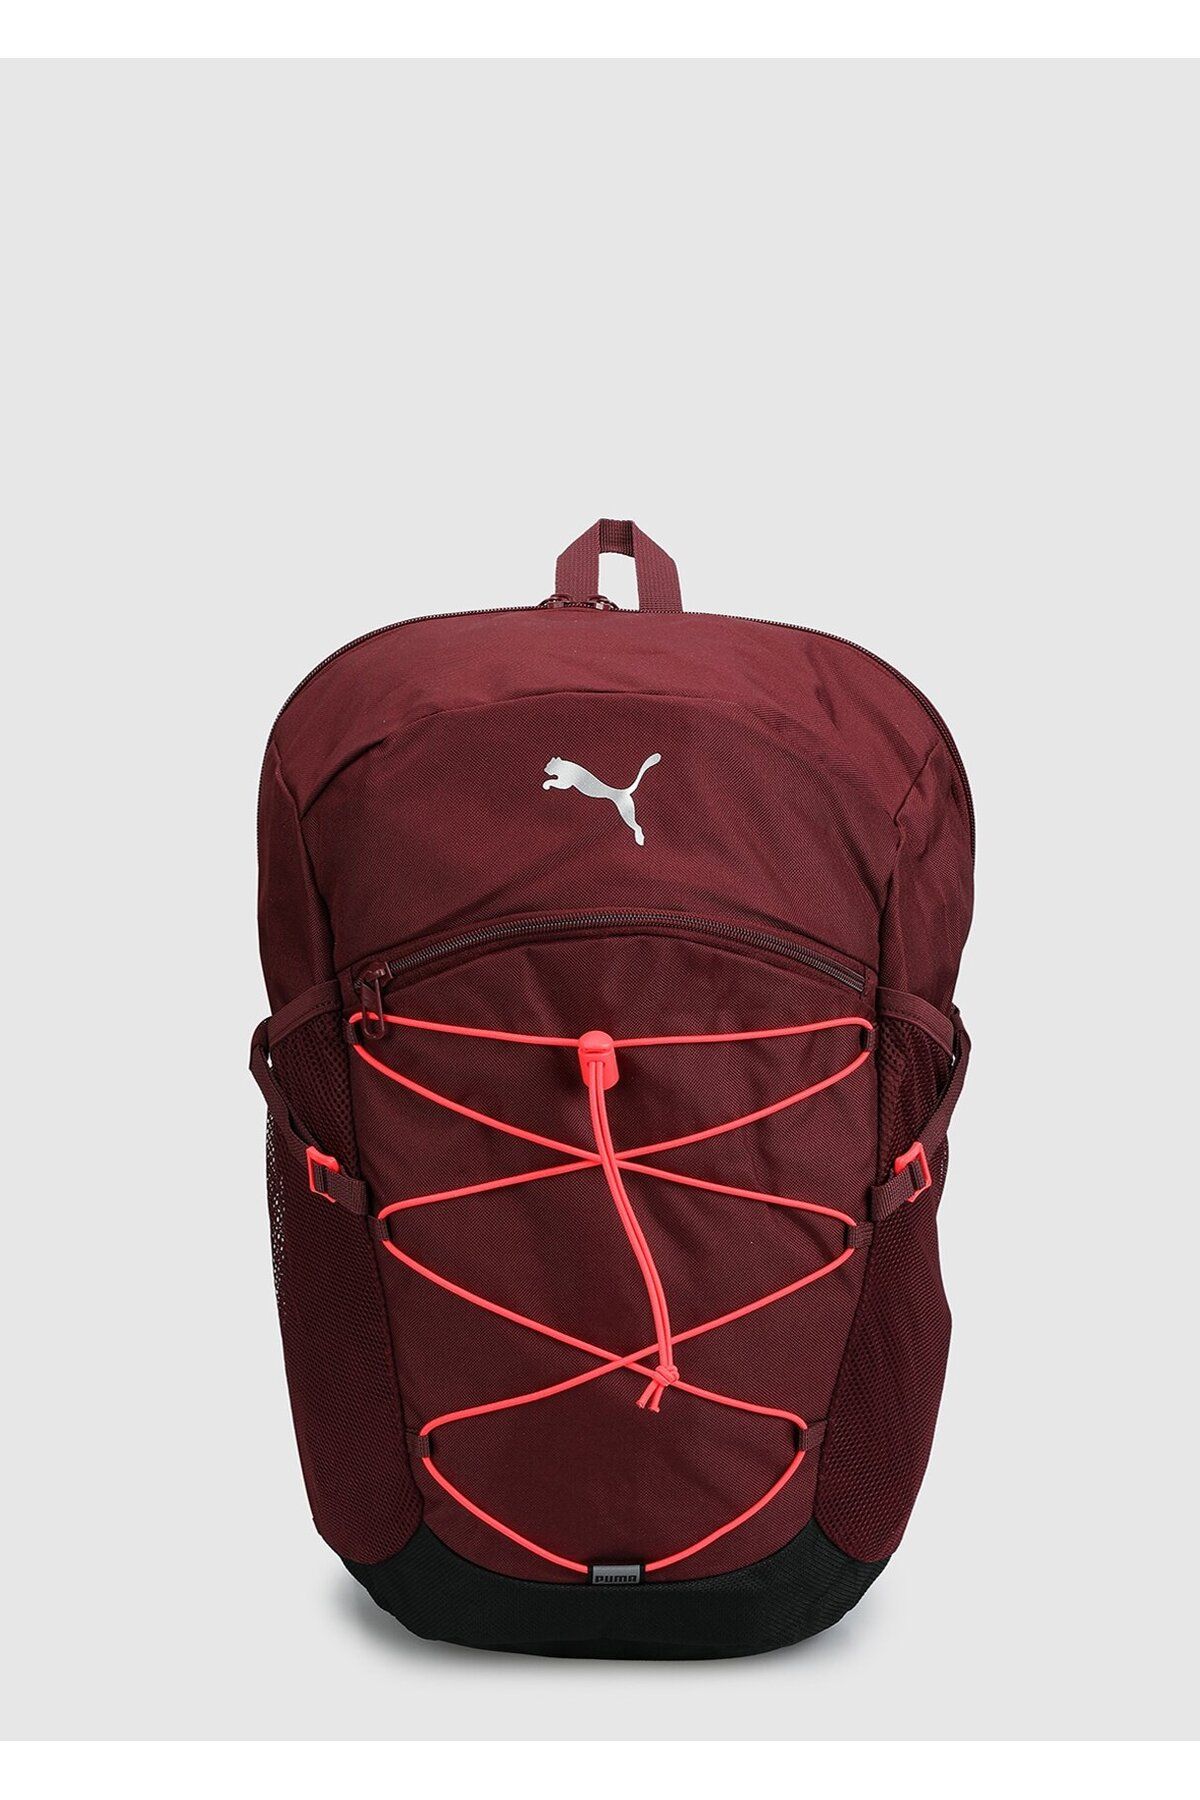 Puma Plus Pro Backpack Dark Jasper Bordo Unısex Sırt Çantası 07952107